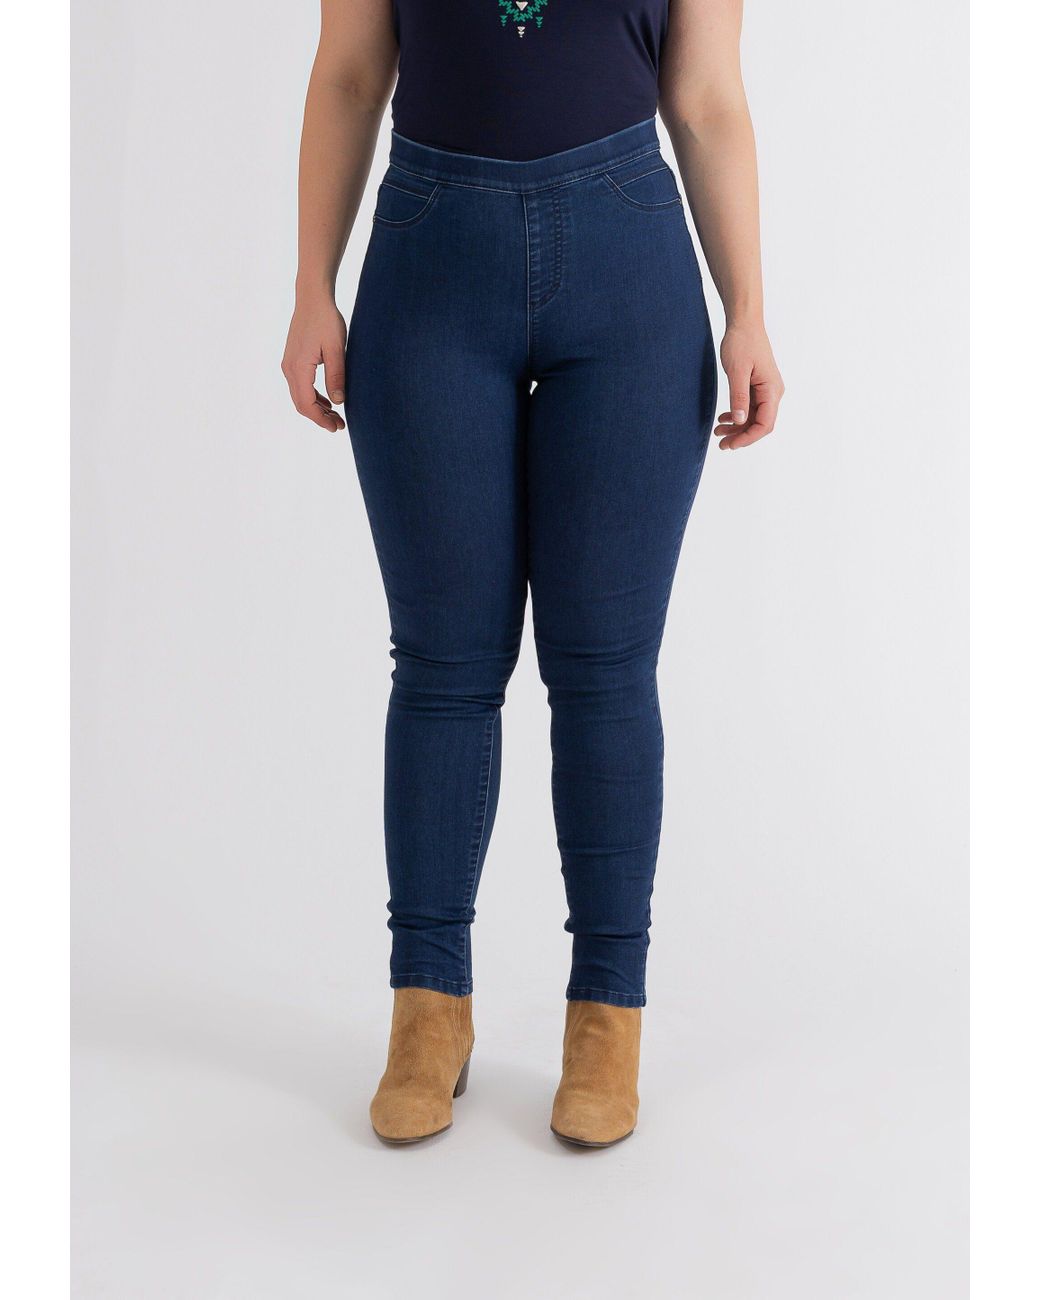 [Beliebter neuer Artikel] October Bequeme Jeans im DE klassischen Lyst in Blau Design 